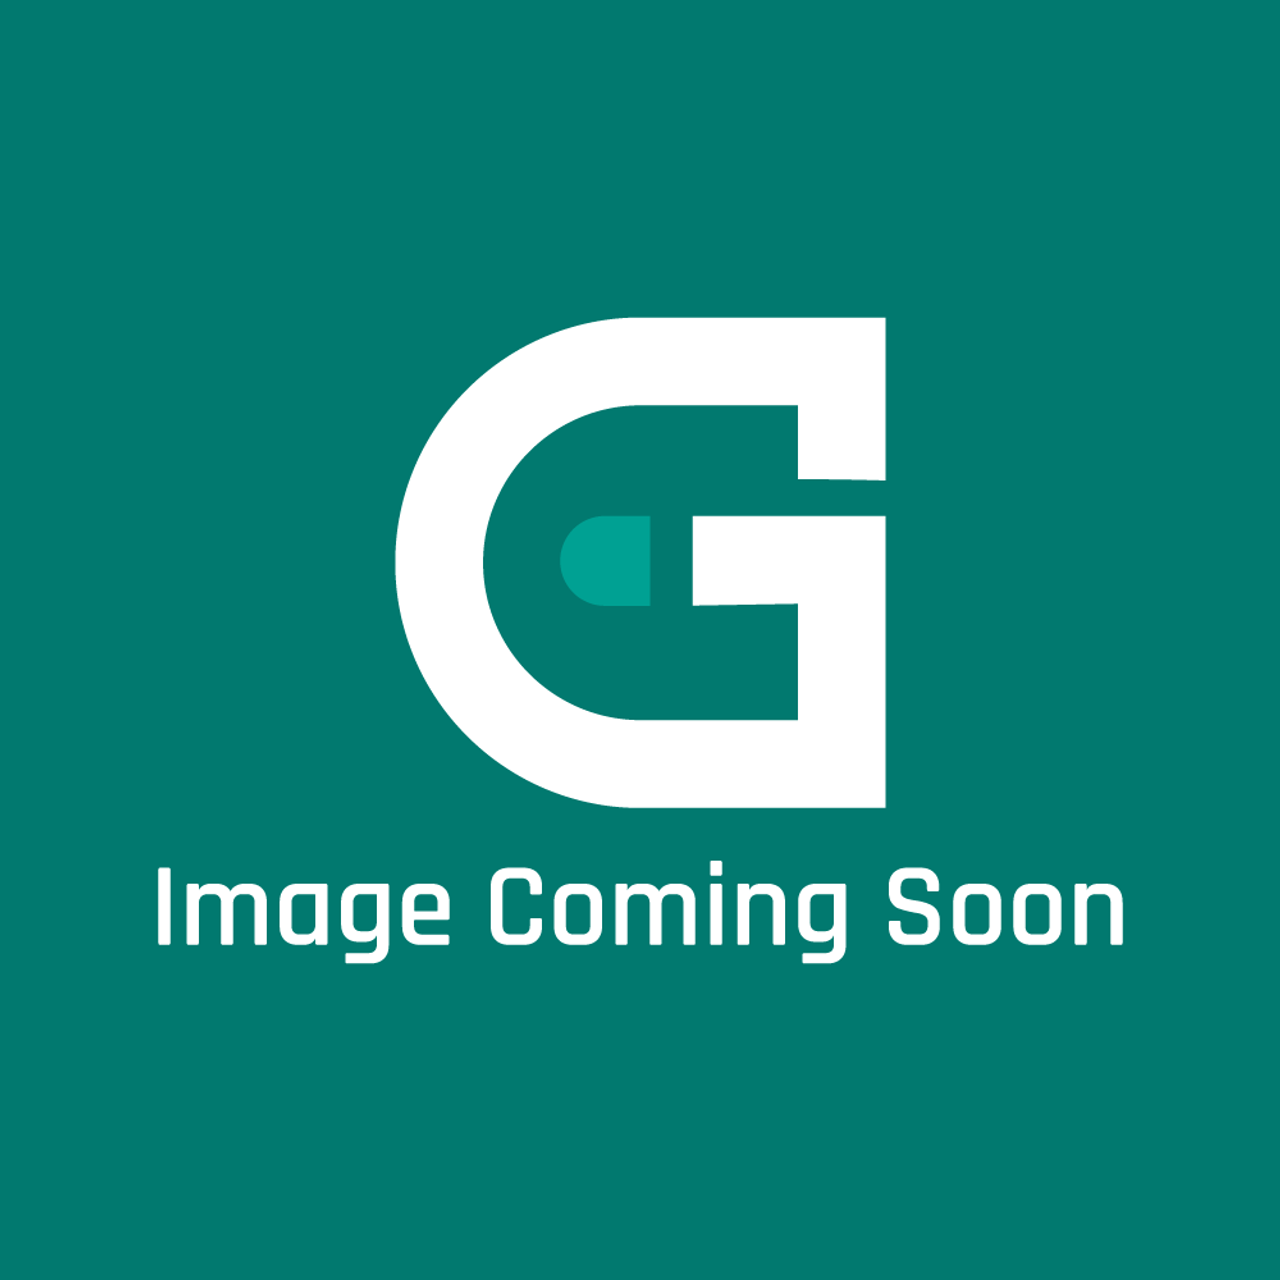 Garland 1472315 - Insul 28 X 21 X 2 - Image Coming Soon!